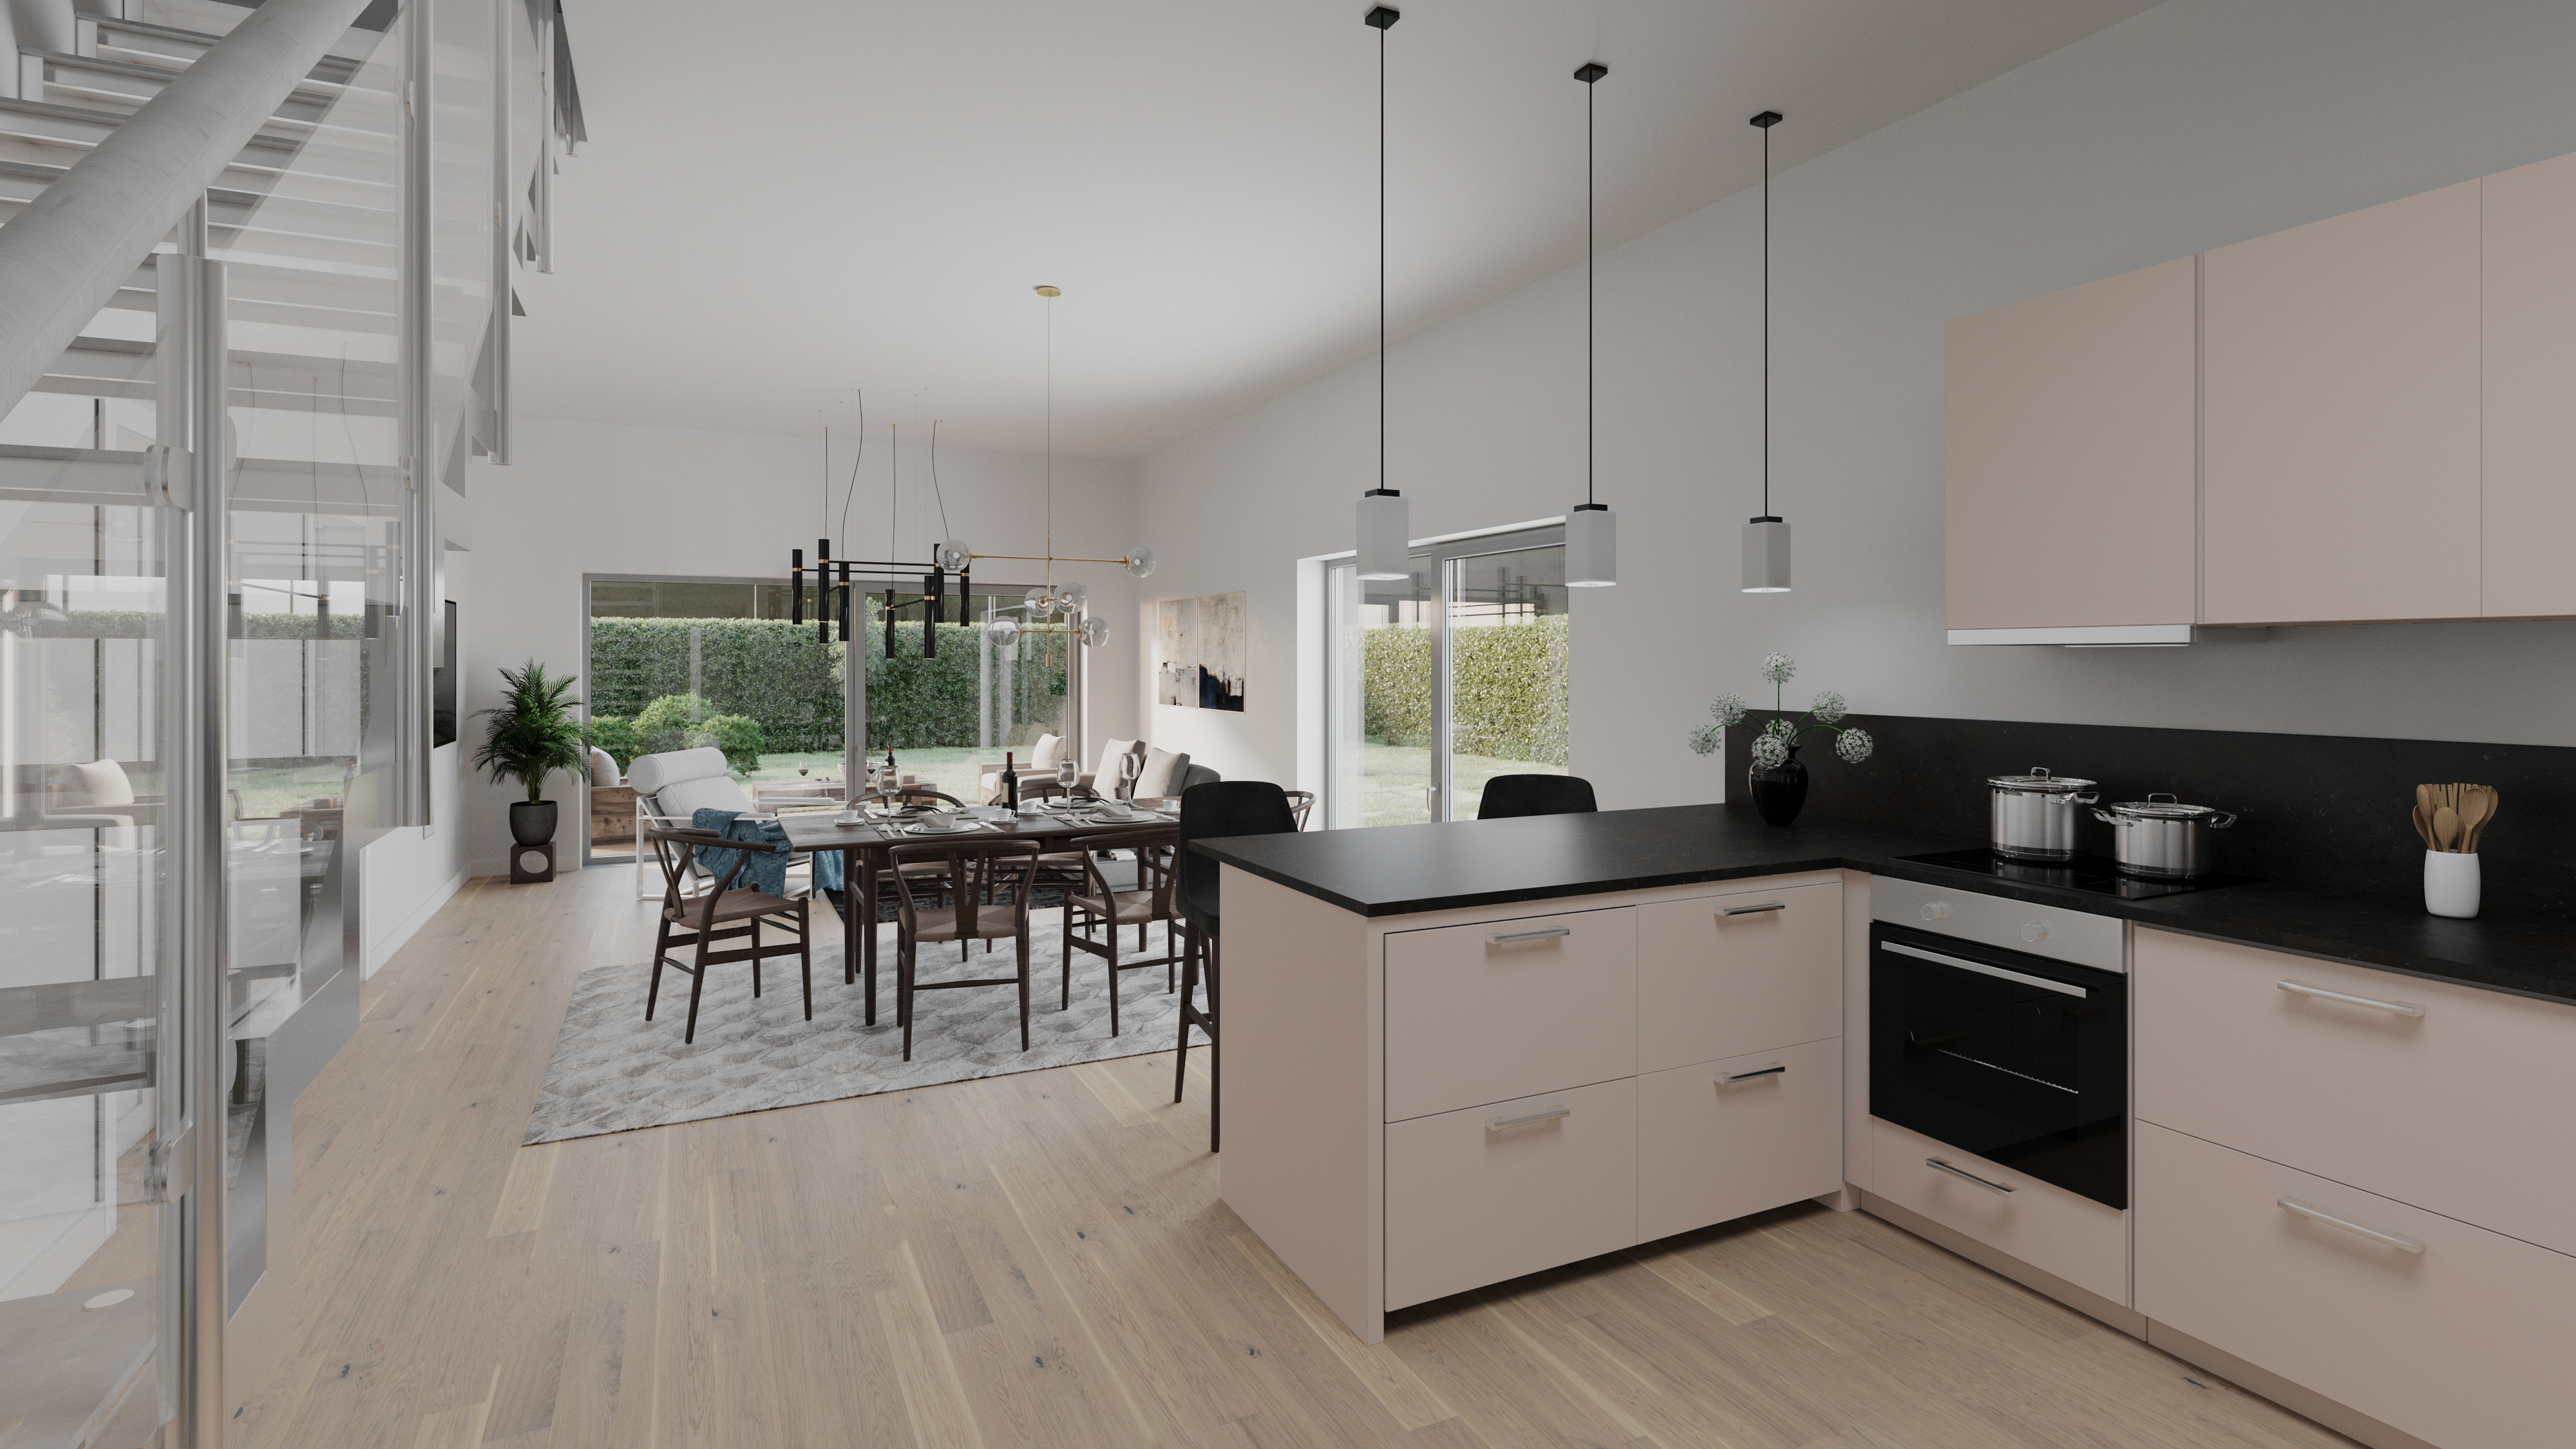 Interior - kitchen-livingroom combo